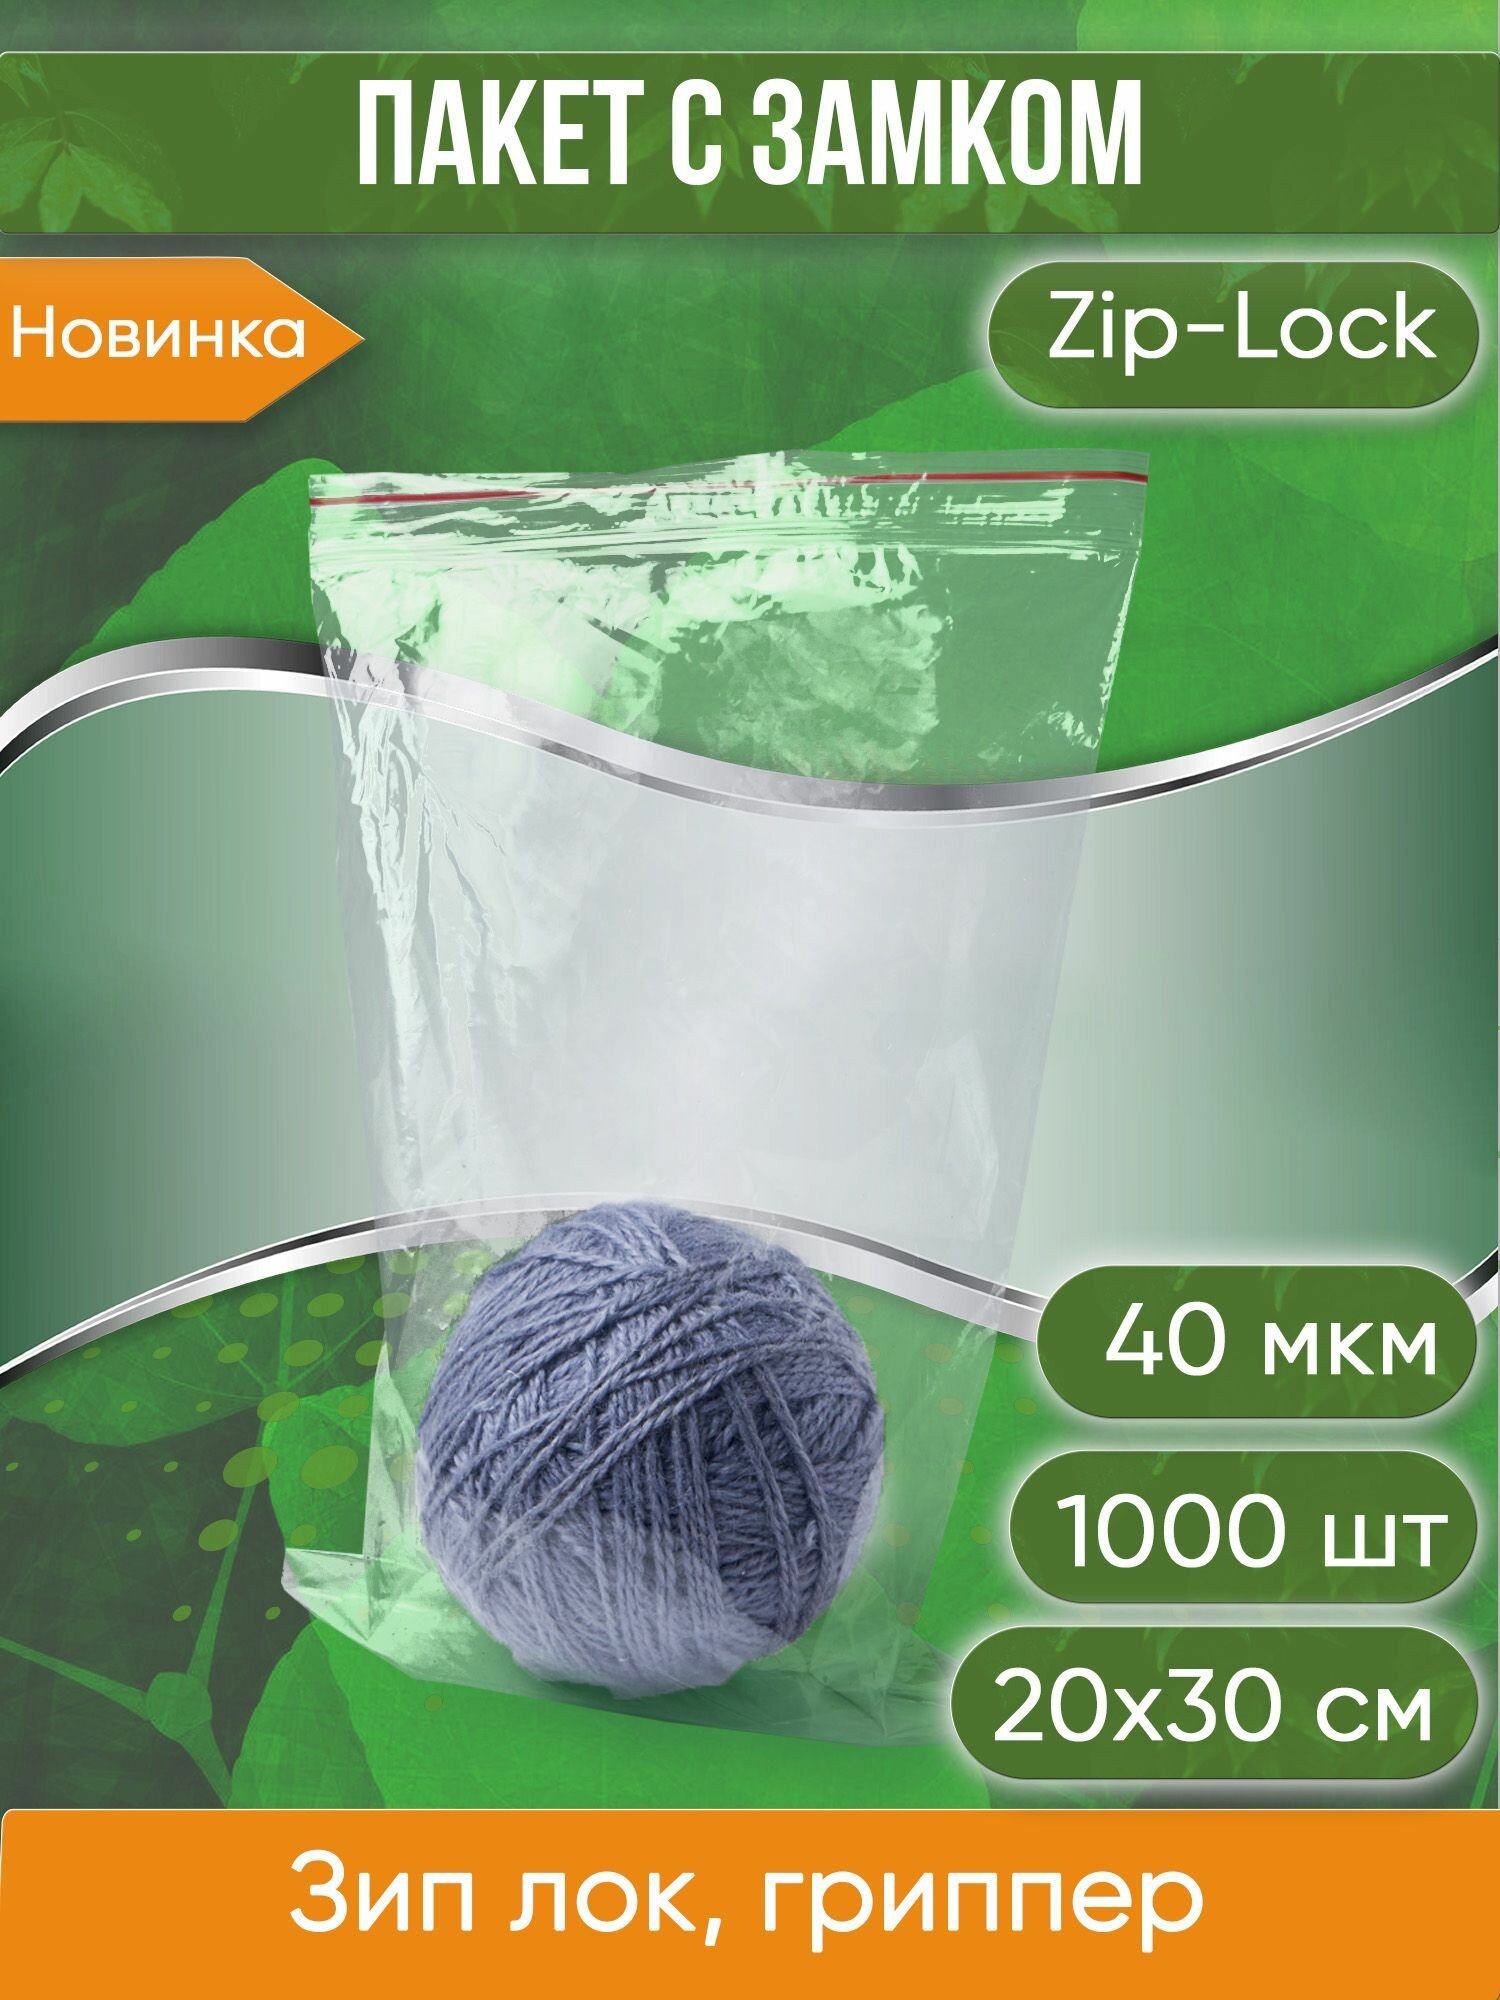 Пакет с замком Zip-Lock (Зип лок), 20х30 см, 40 мкм, 1000 шт. - фотография № 1